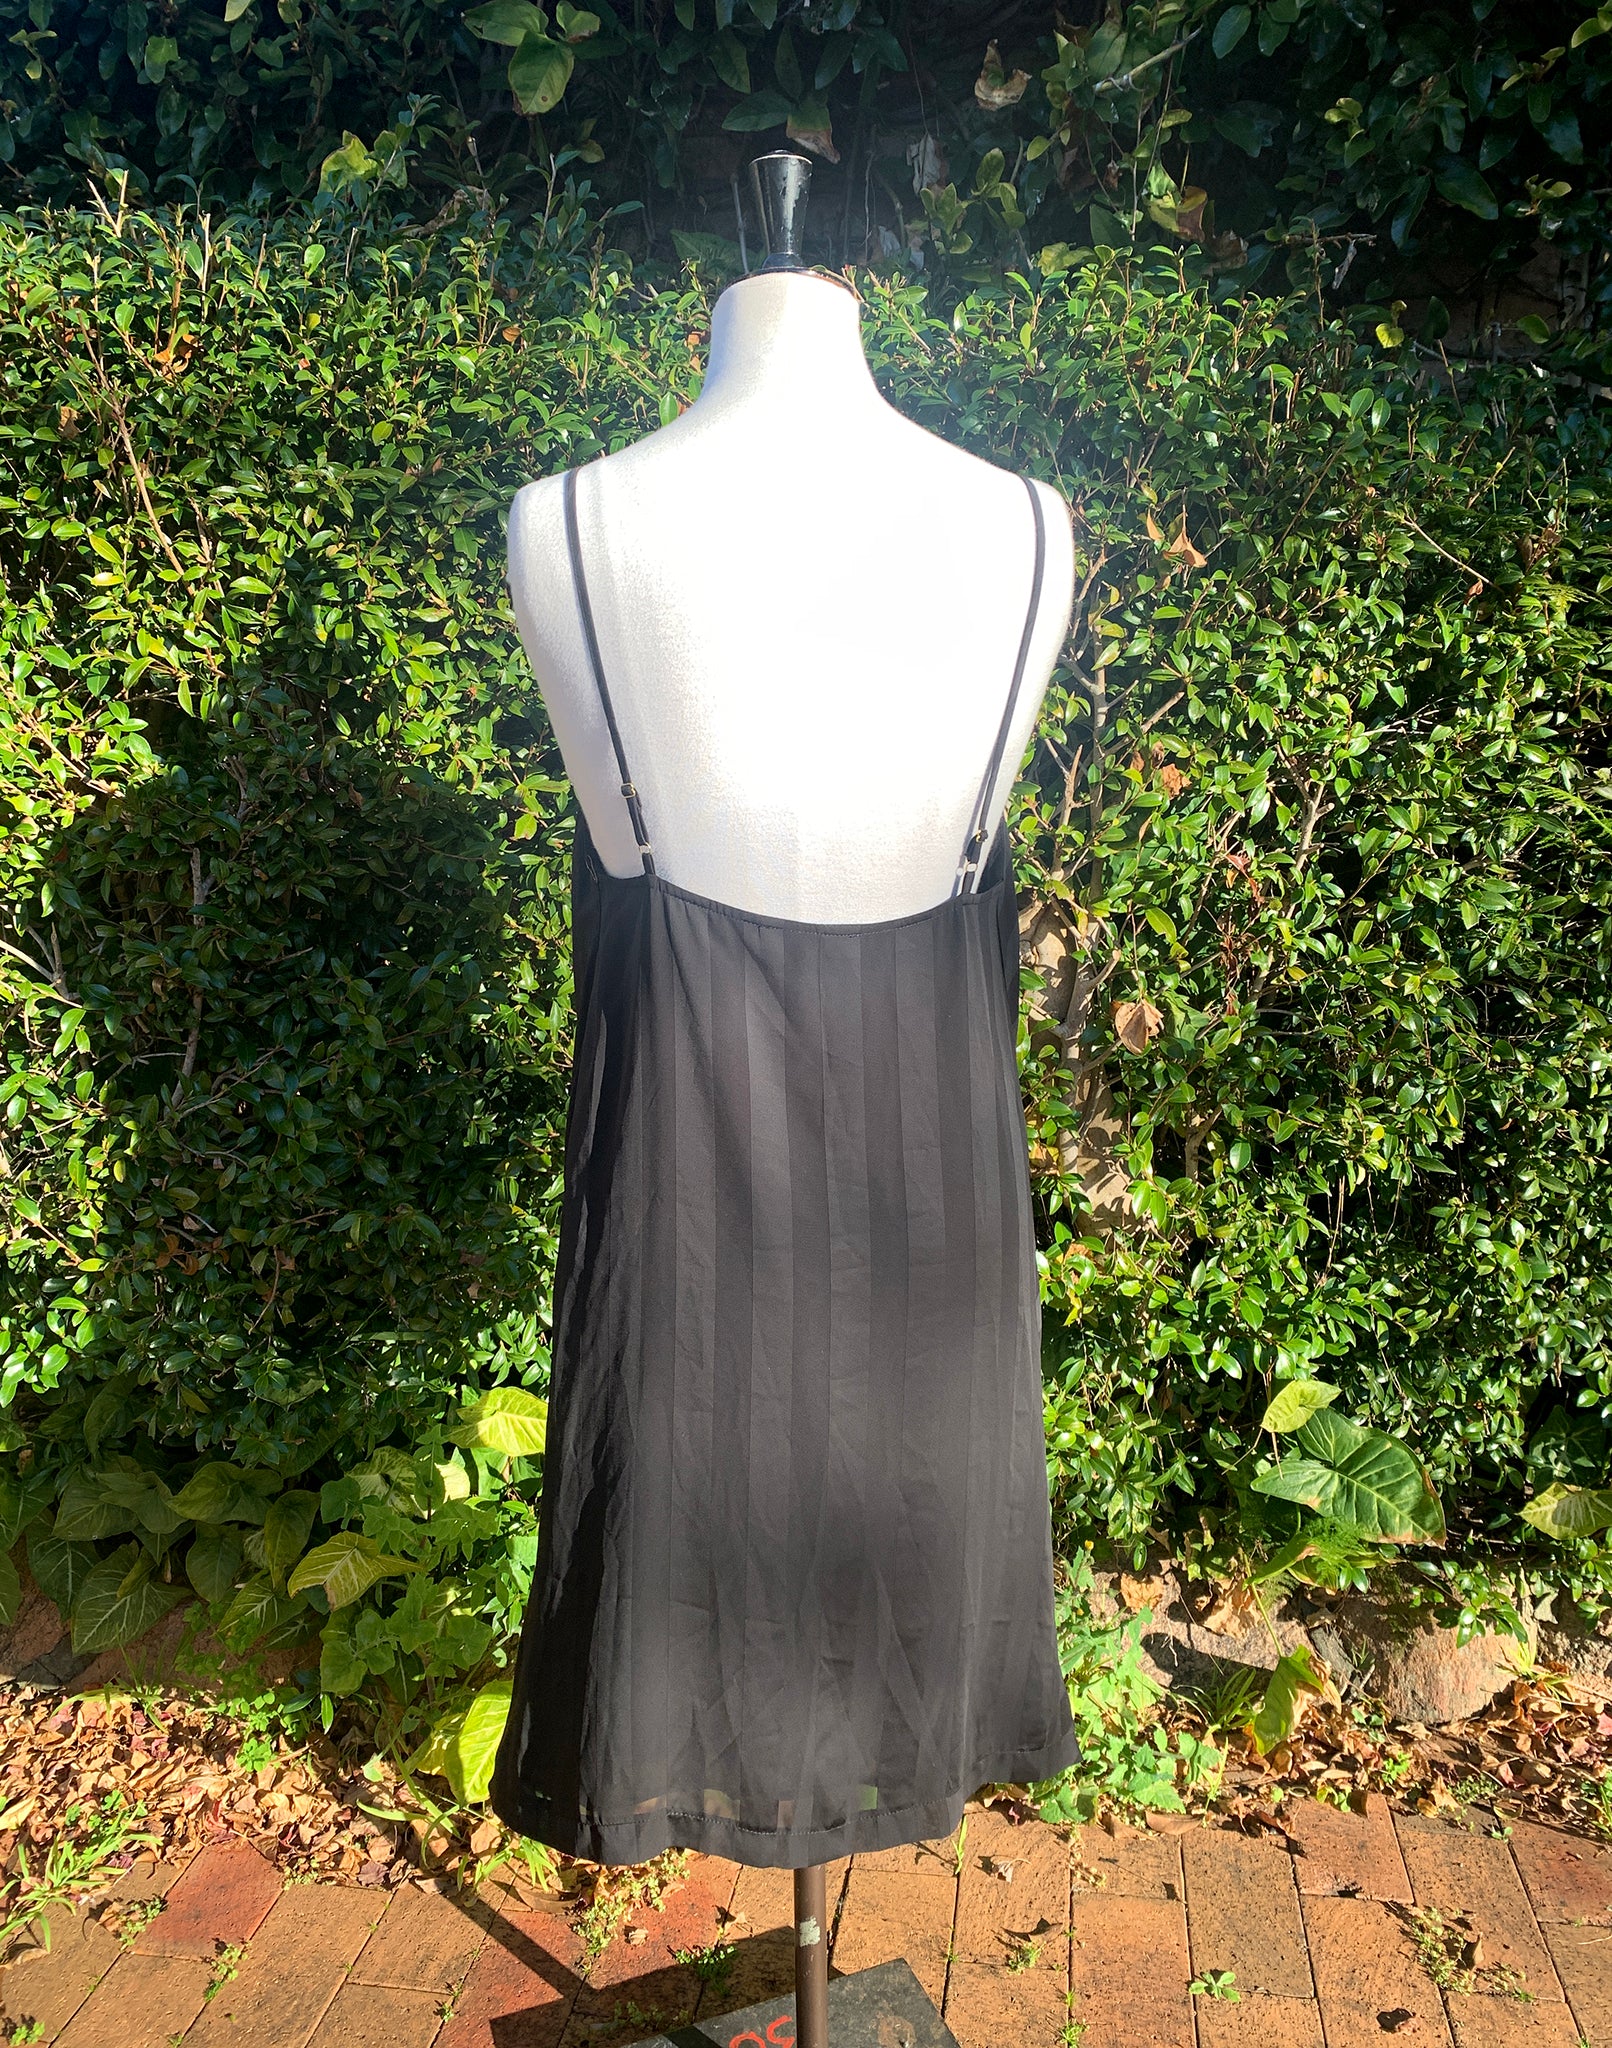 Shona Joy Black Satin Slip Dress Size XS / S BNWT